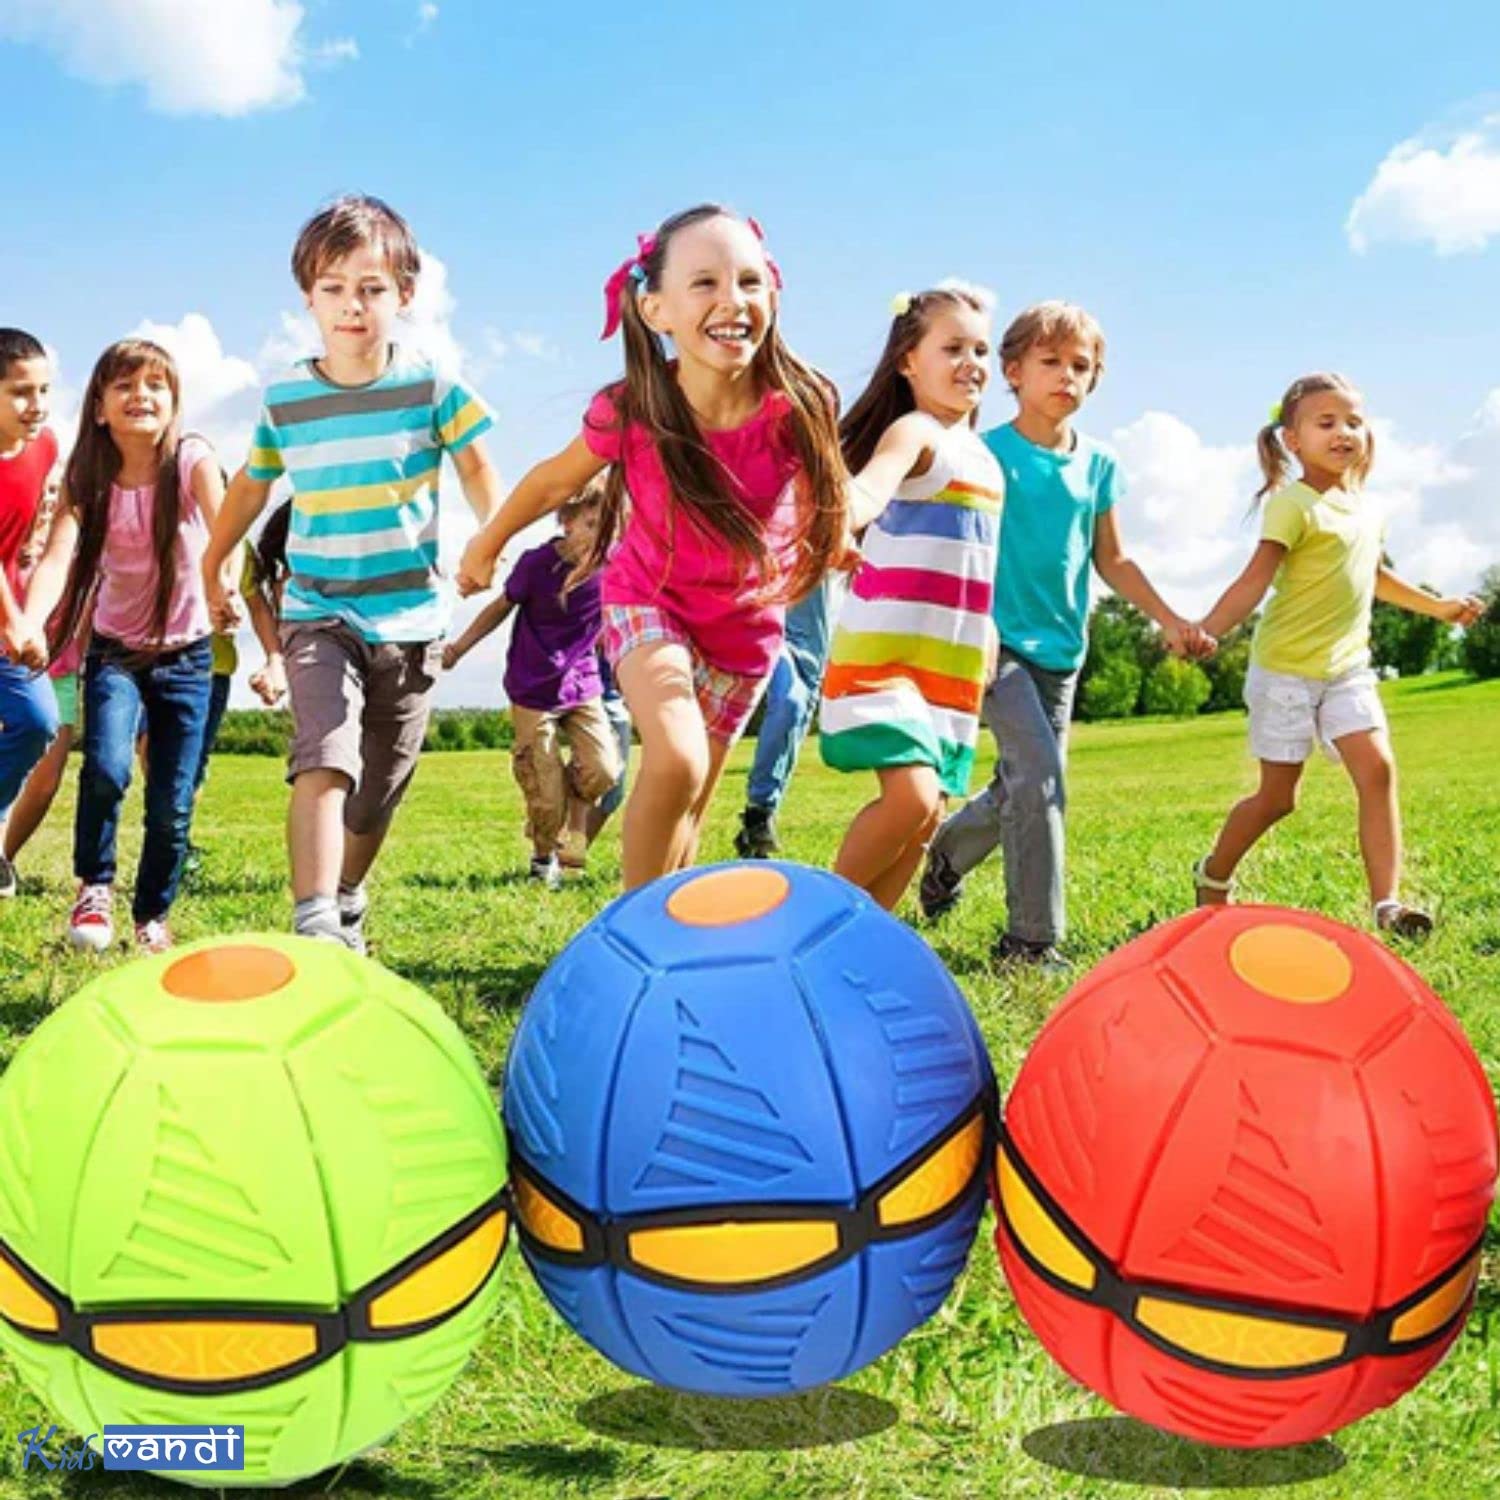 Kids Mandi UFO Magic Ball - Portable Flying Saucer Toy